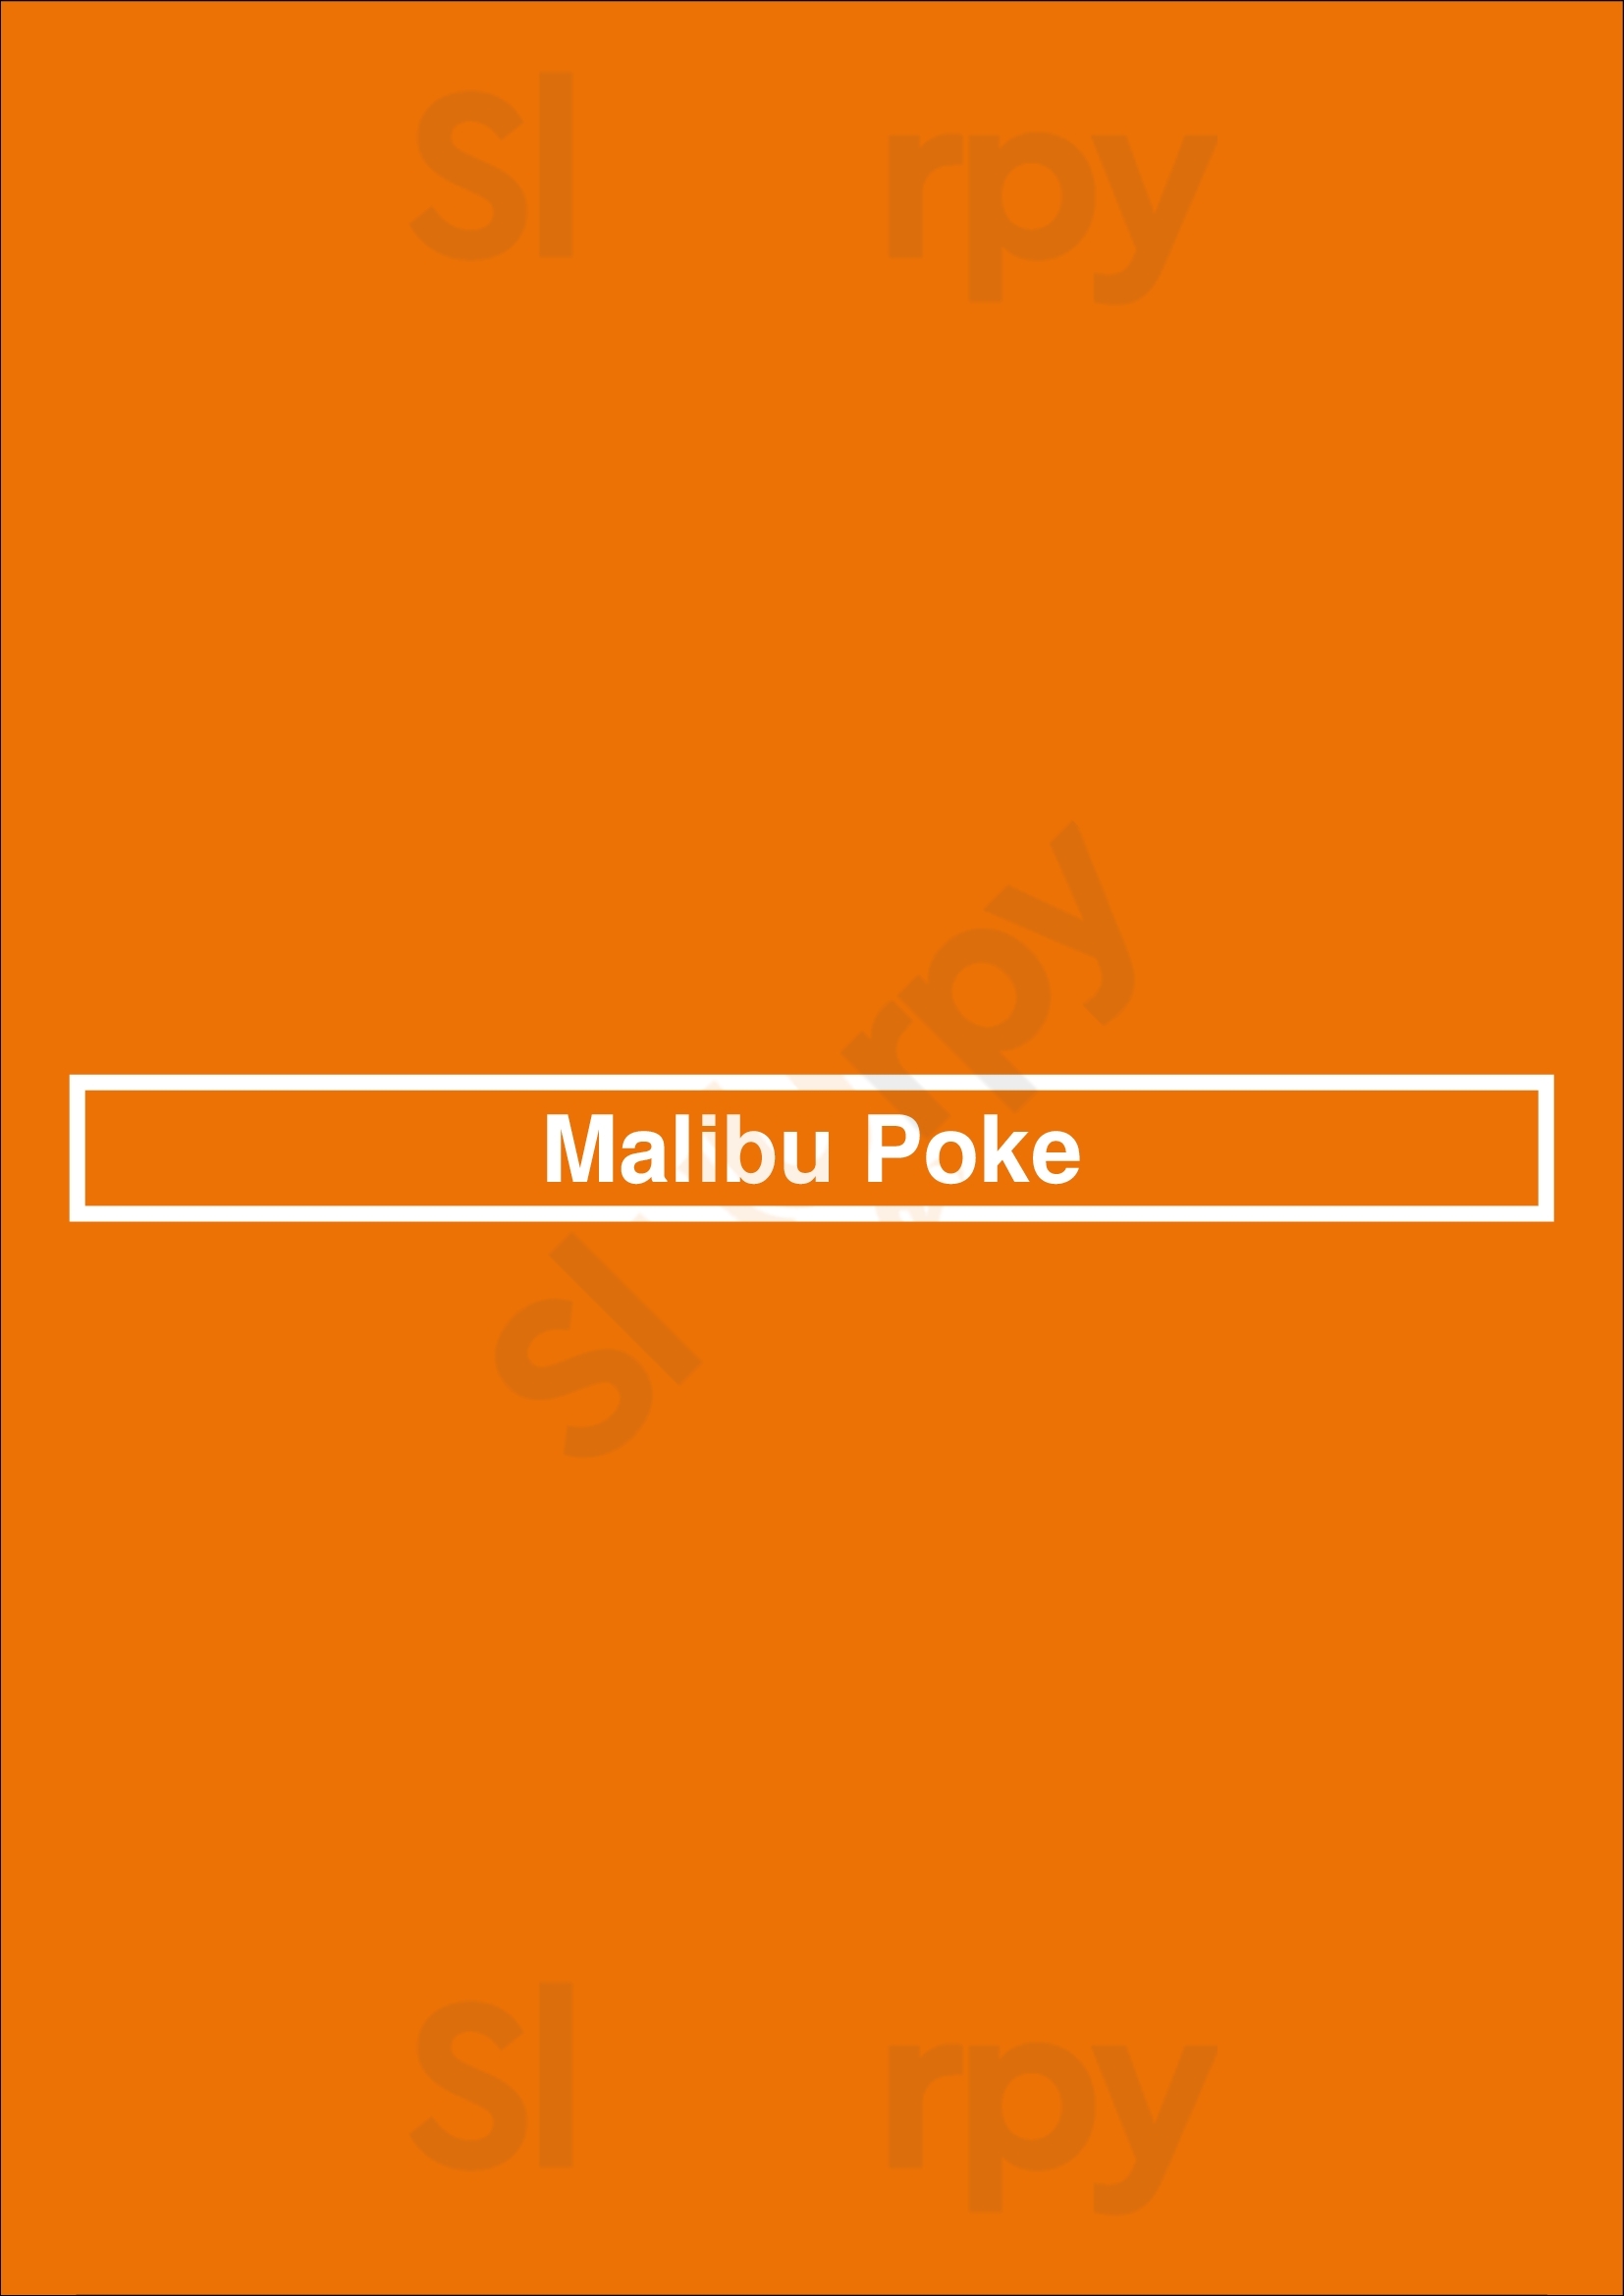 Malibu Poke Dallas Menu - 1